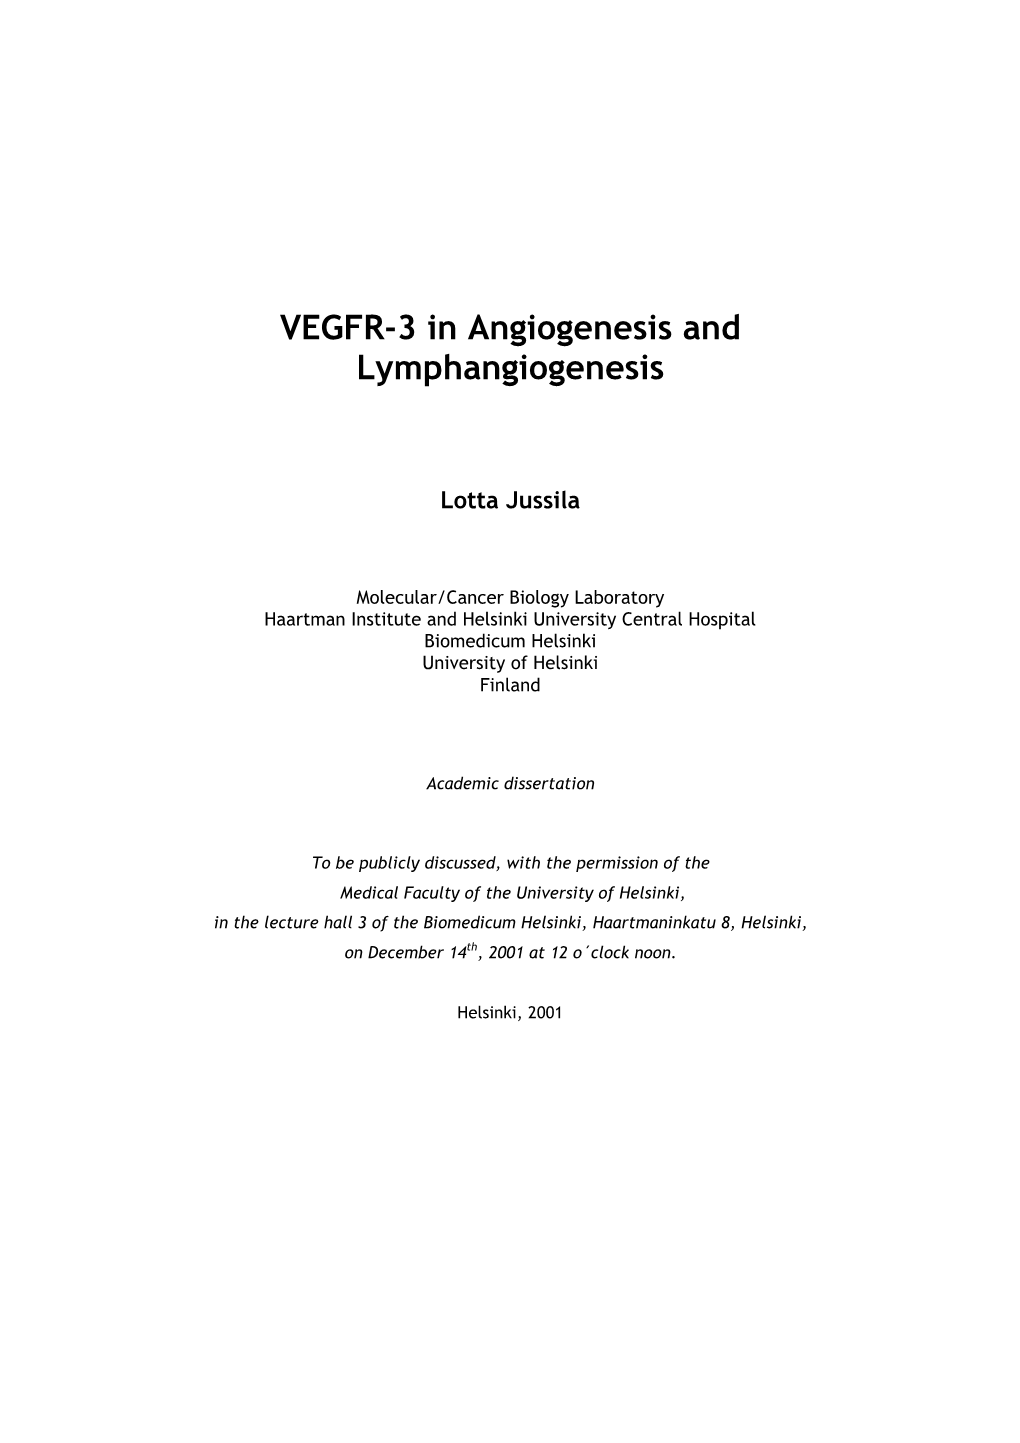 VEGFR-3 in Angiogenesis and Lymphangiogenesis